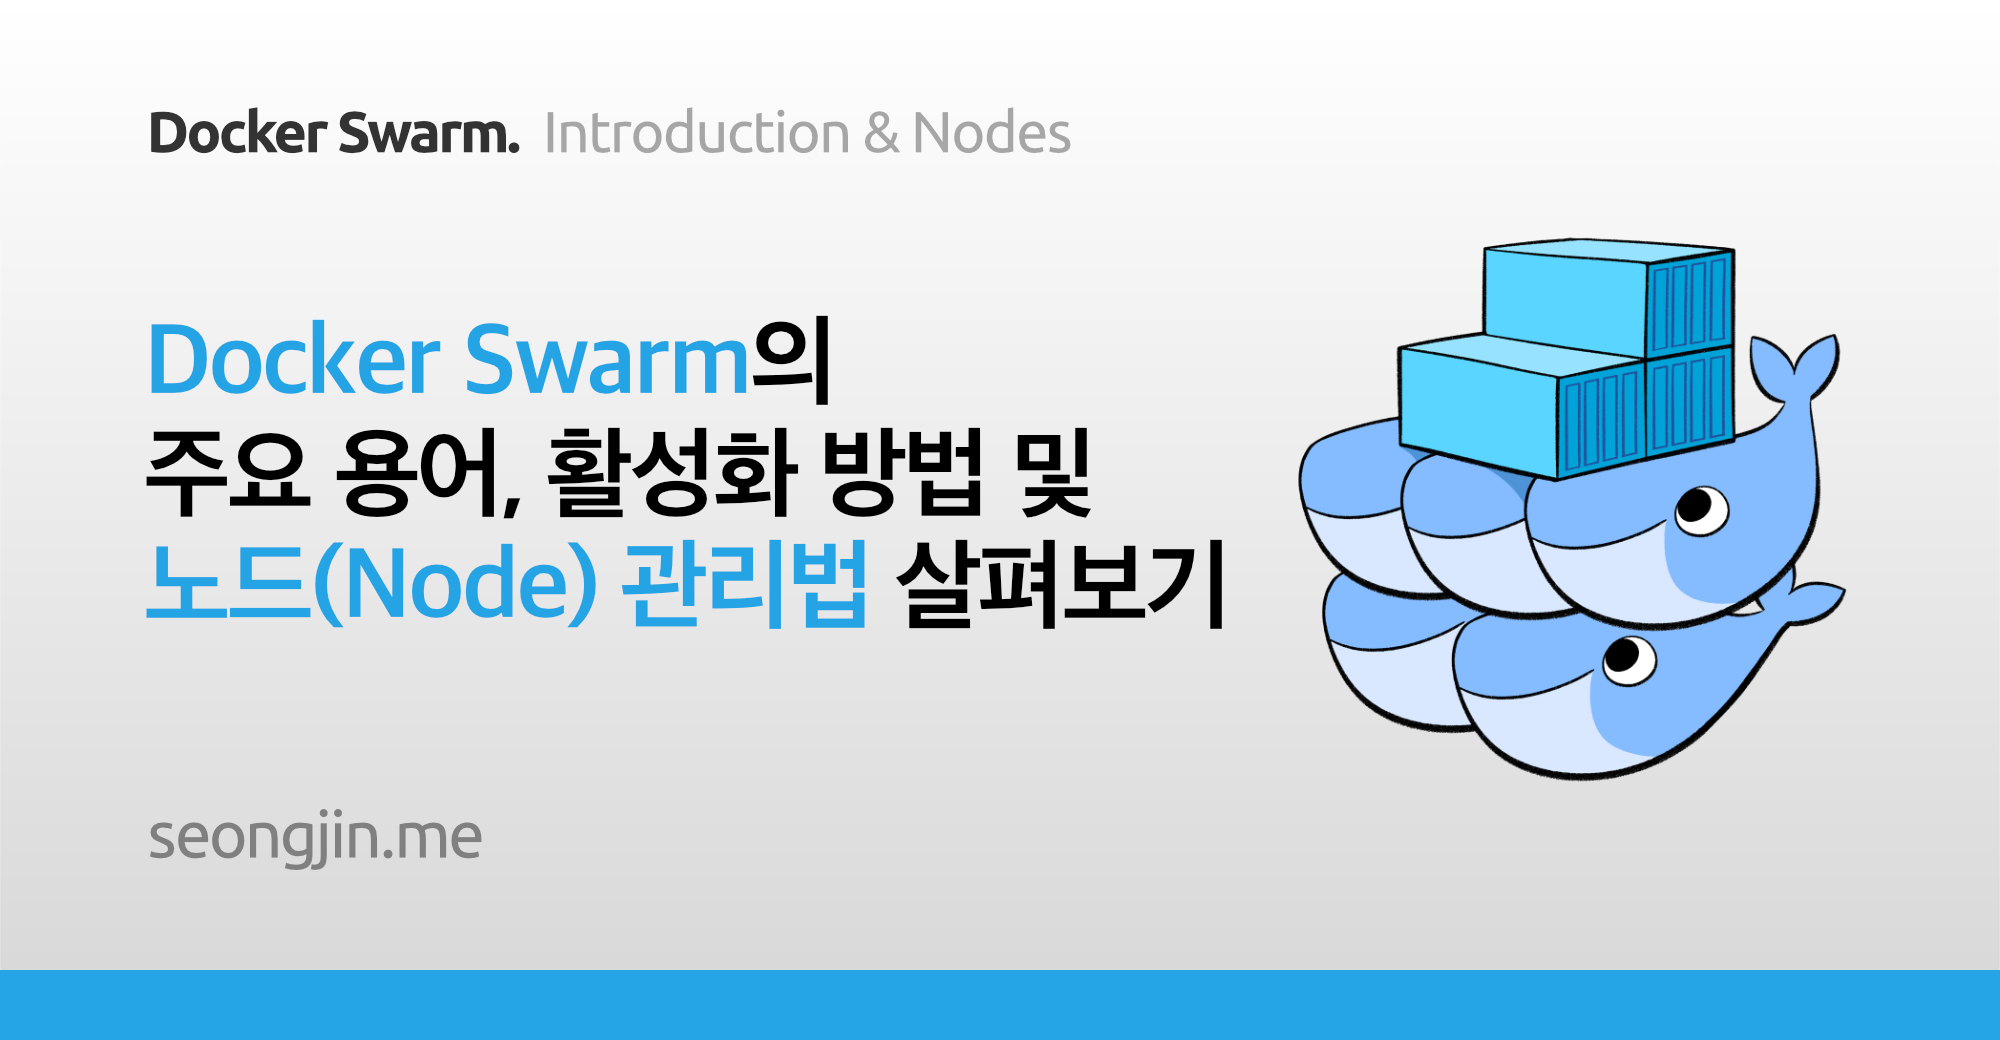 Docker Swarm의 주요 용어, 활성화 방법 및 노드(Node) 관리법 살펴보기